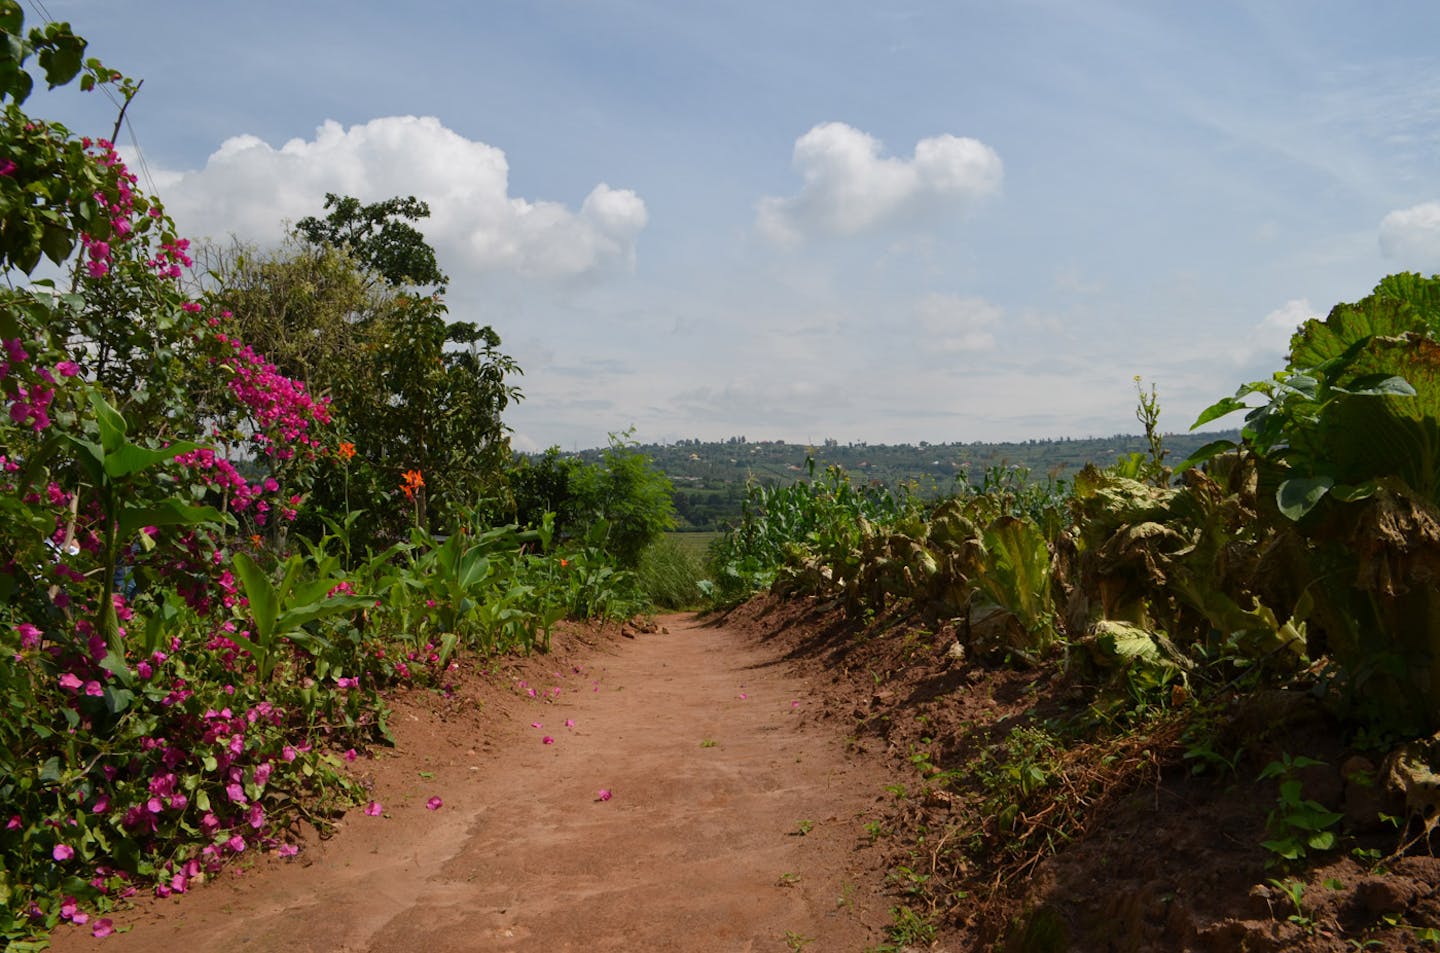 This farm outside Rwanda’s capital teaches women farmers how to mitigate climate change